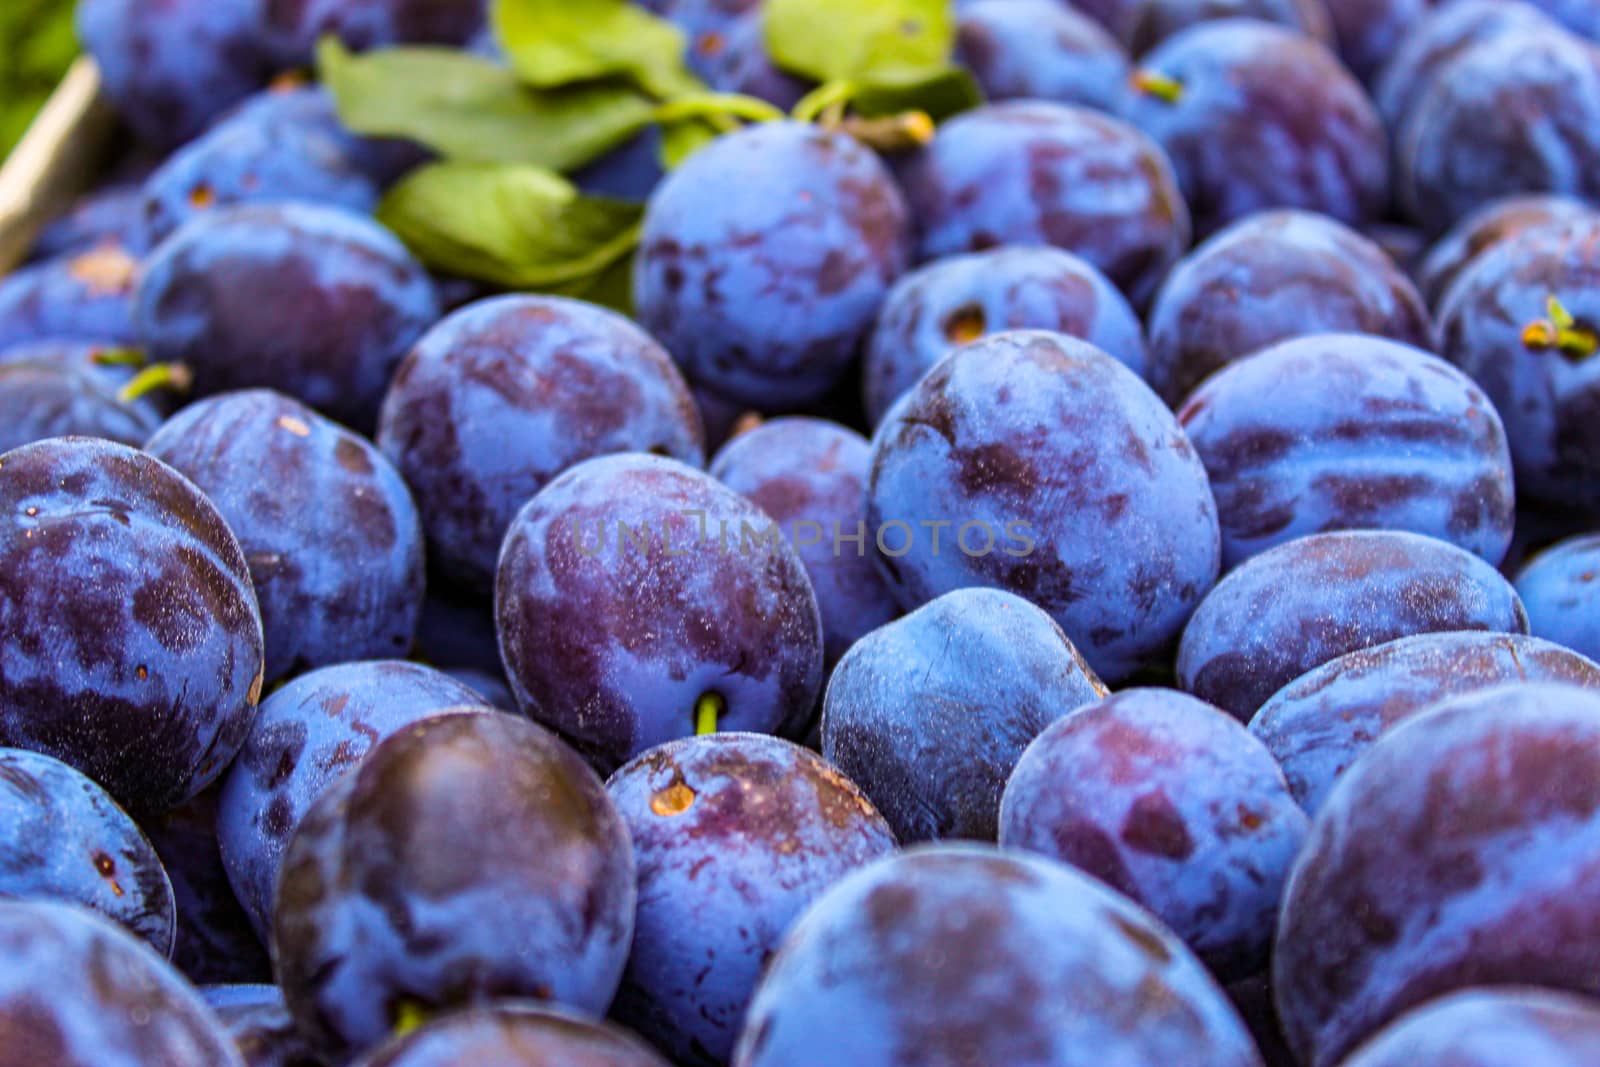 Full frame of fruit plums, prunus domestica. Zavidovici, Bosnia and Herzegovina.